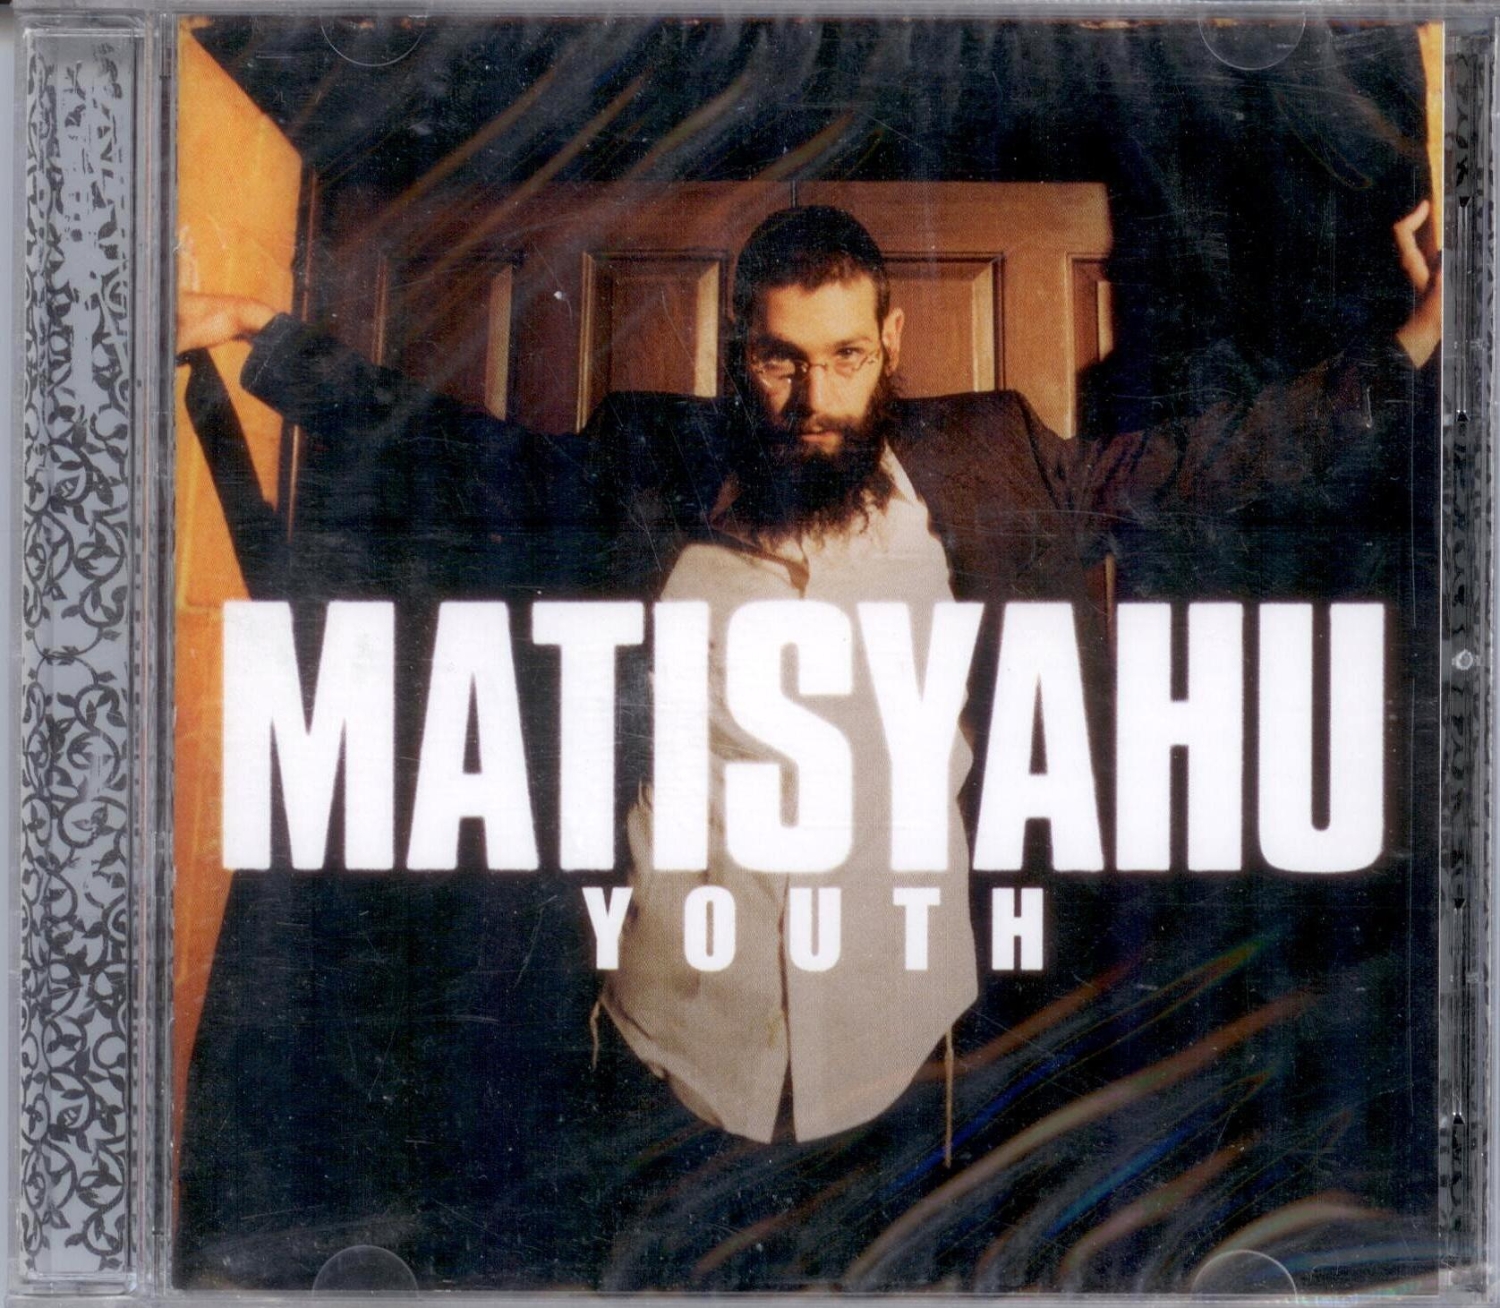  Matisyahu. Youth (2006) - 2